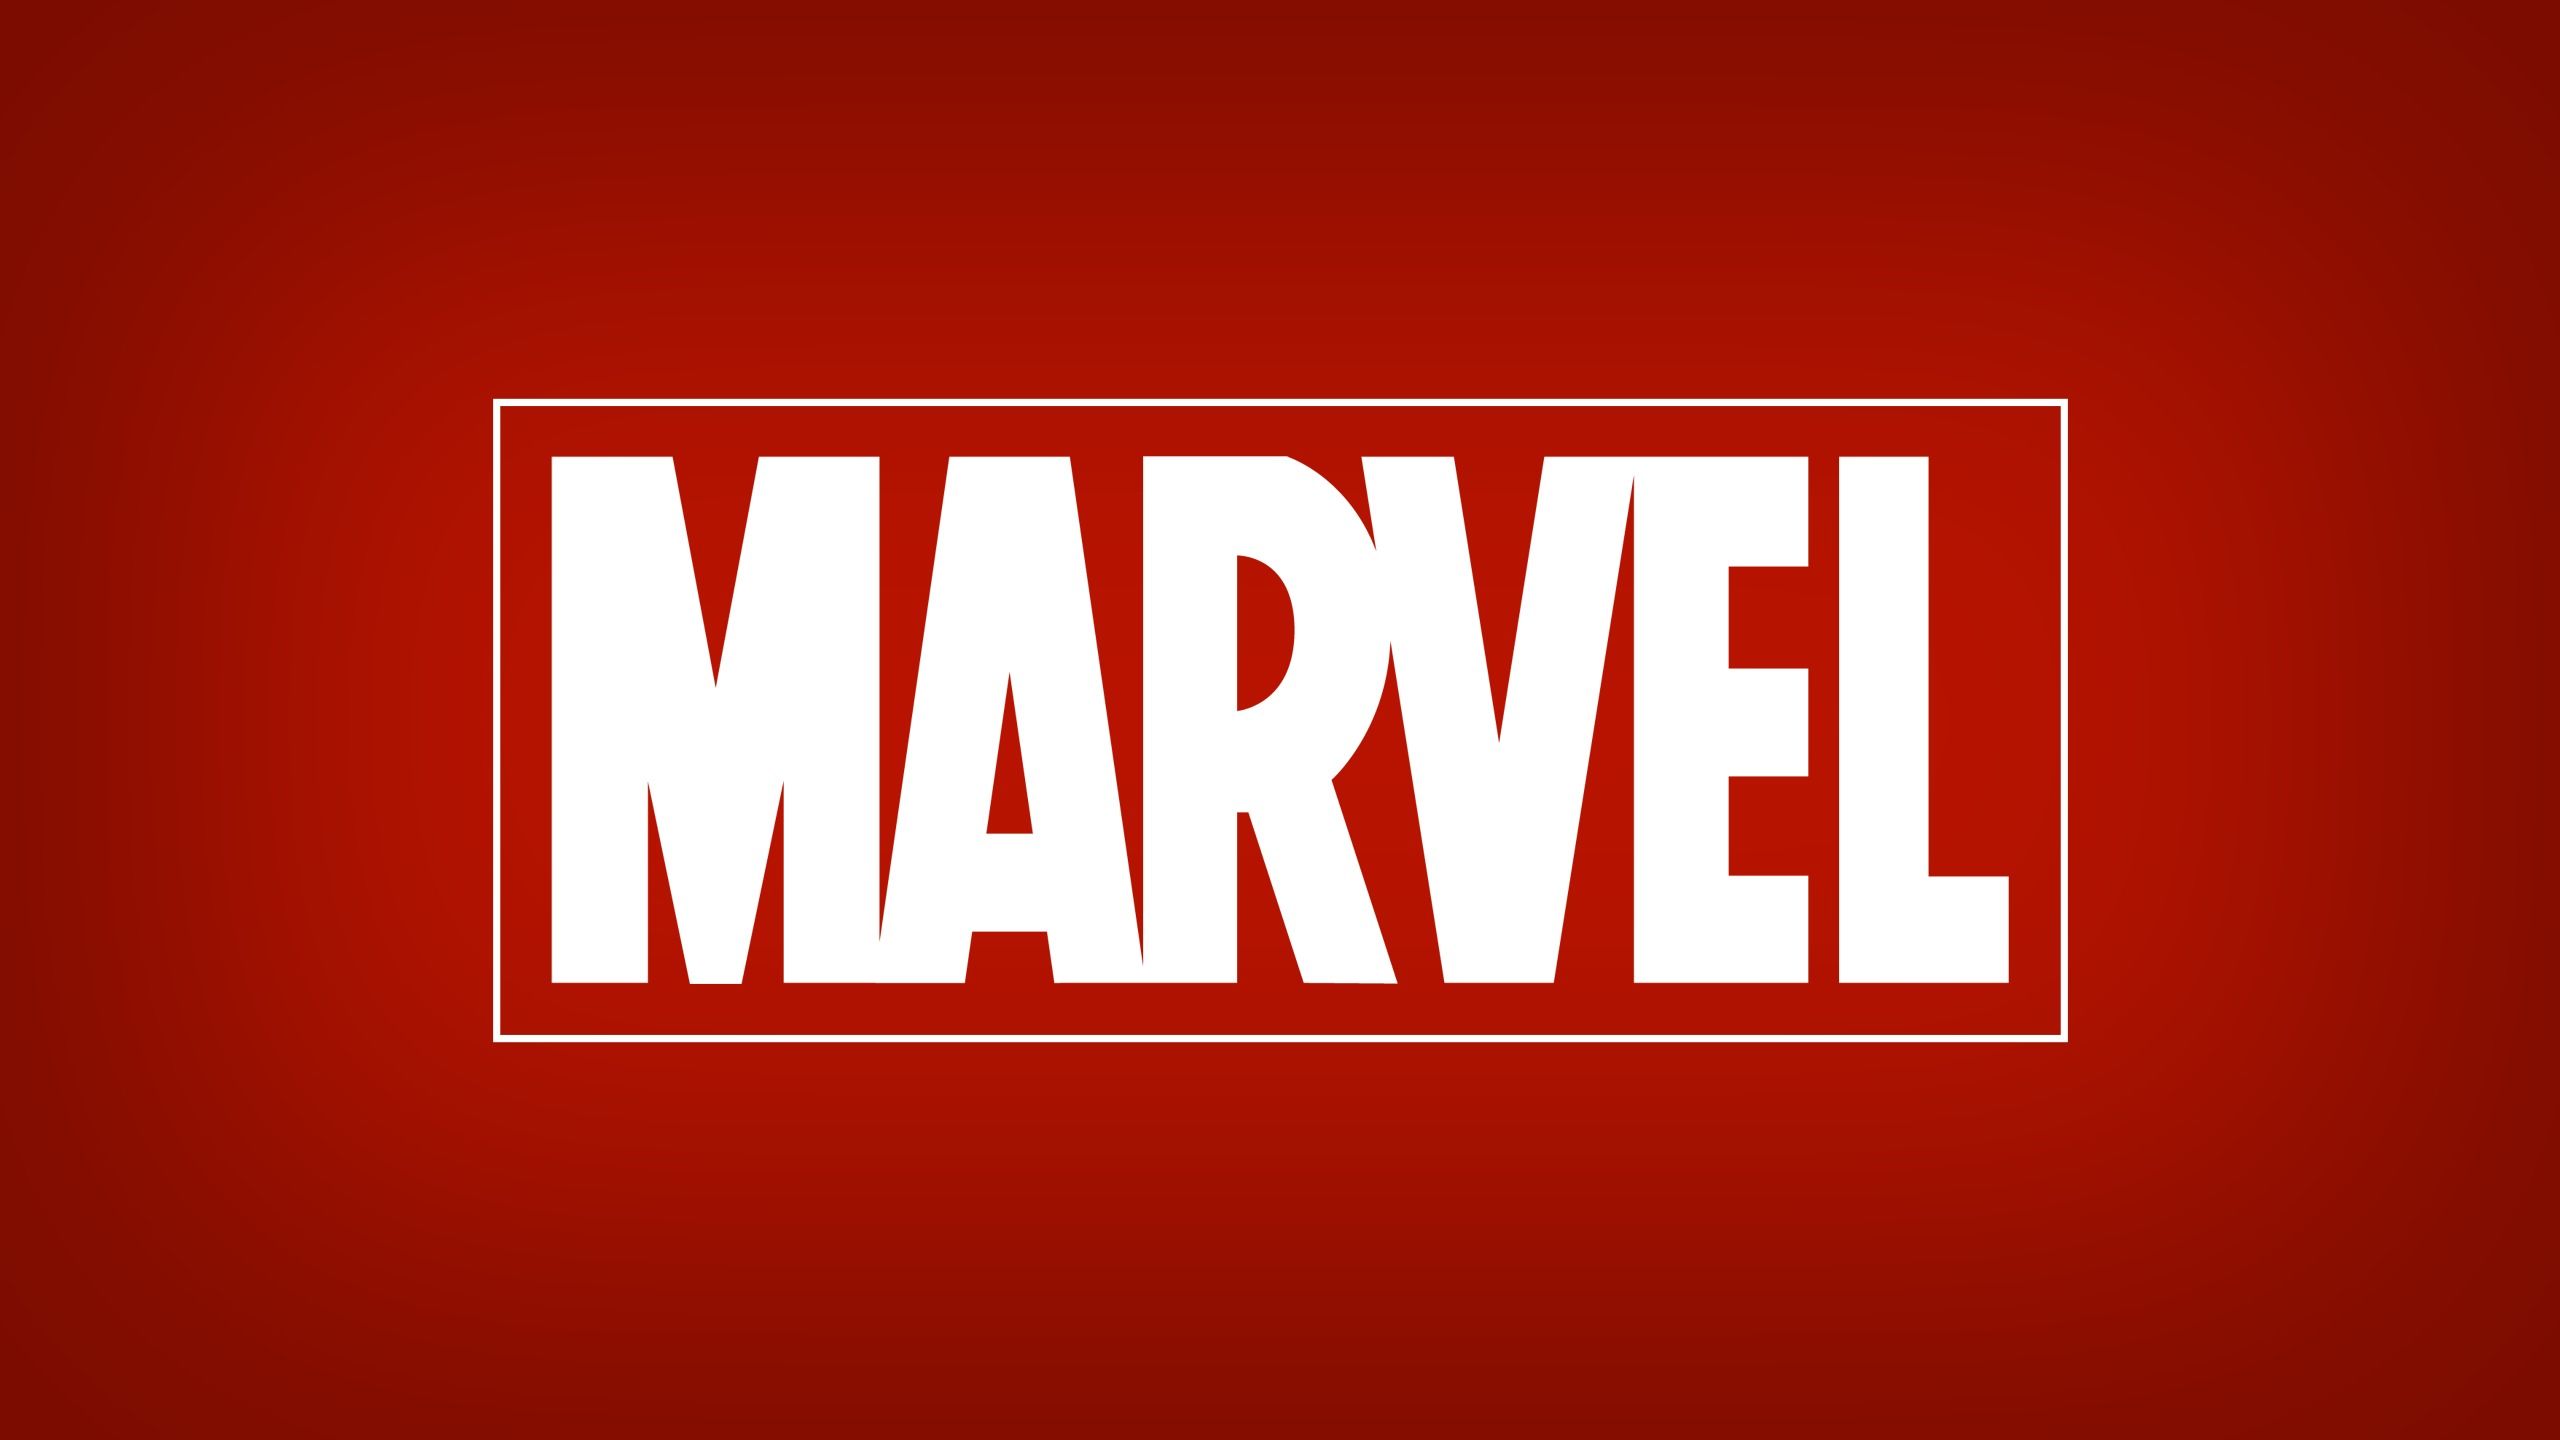 Marvel Logo Desktop Wallpapers On Wallpaperdog